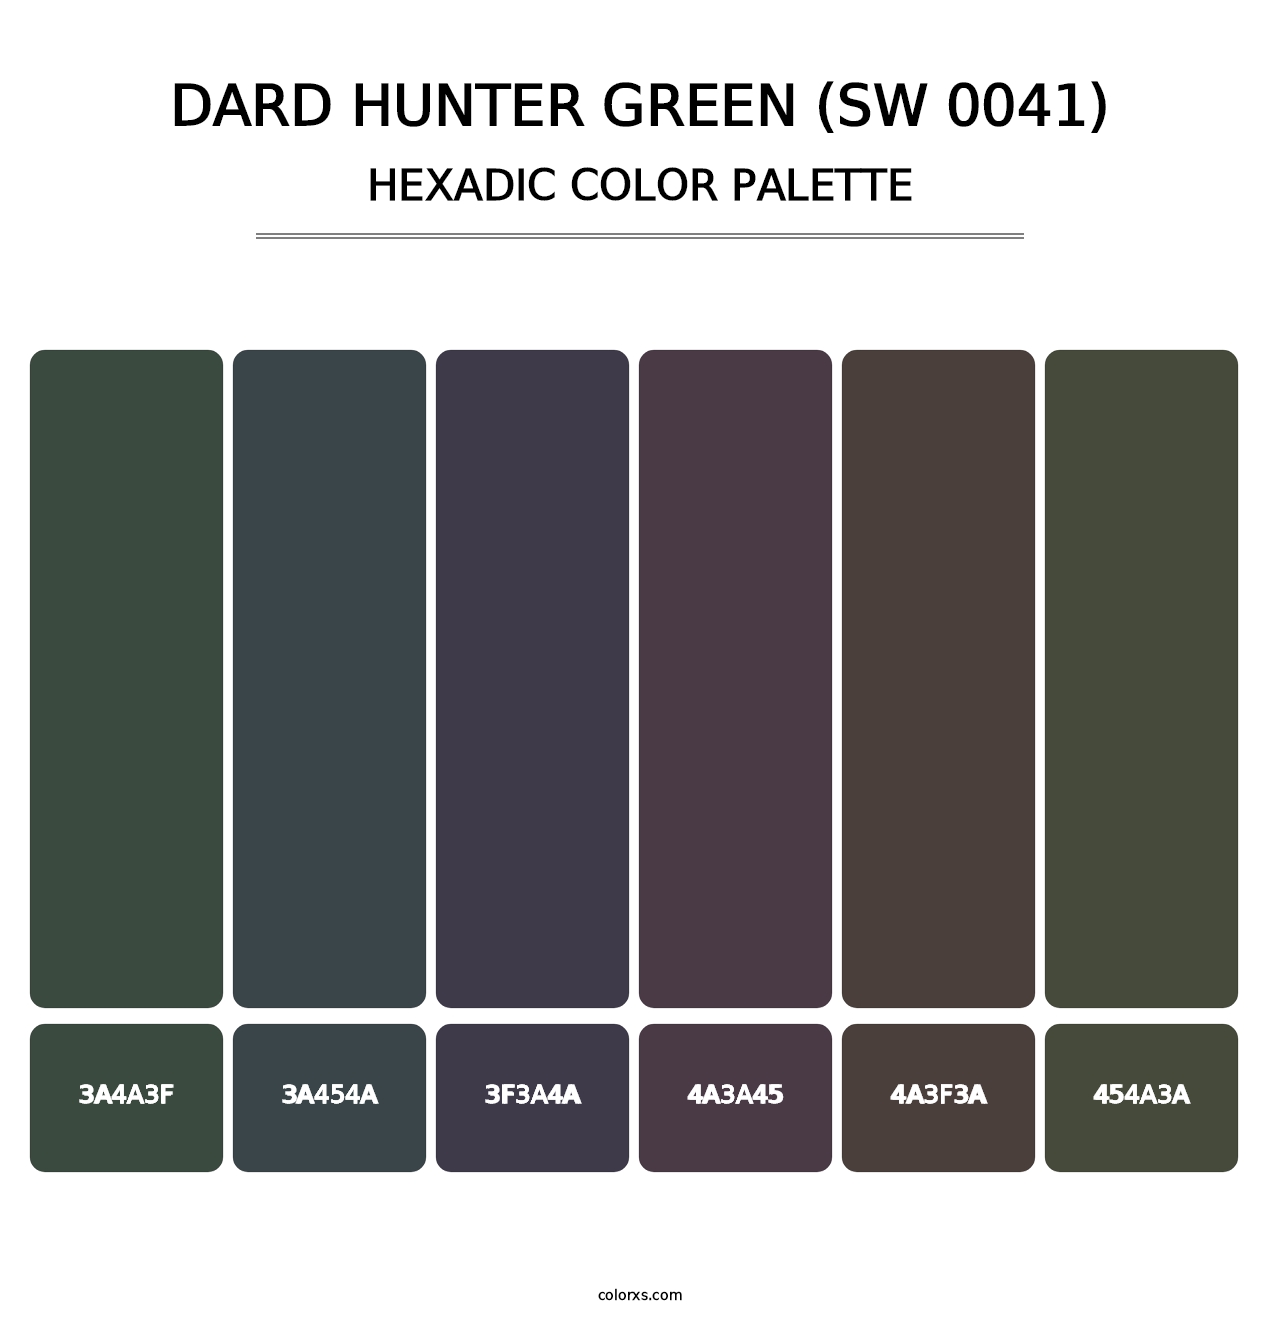 Dard Hunter Green (SW 0041) - Hexadic Color Palette